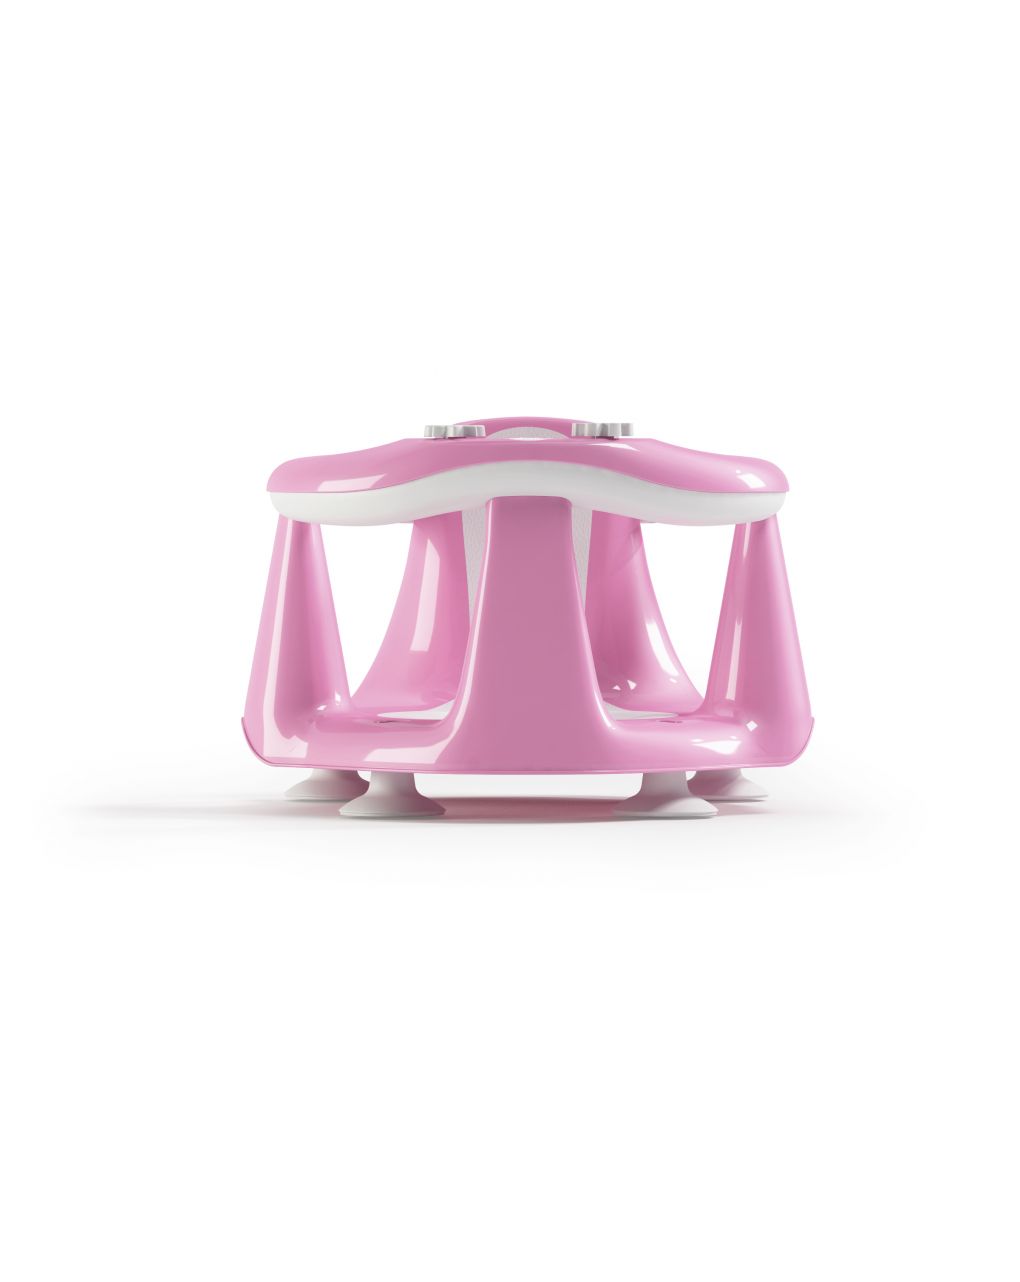 Flipper evolution rosa - assento de banho antiderrapante - ok baby - Ok Baby